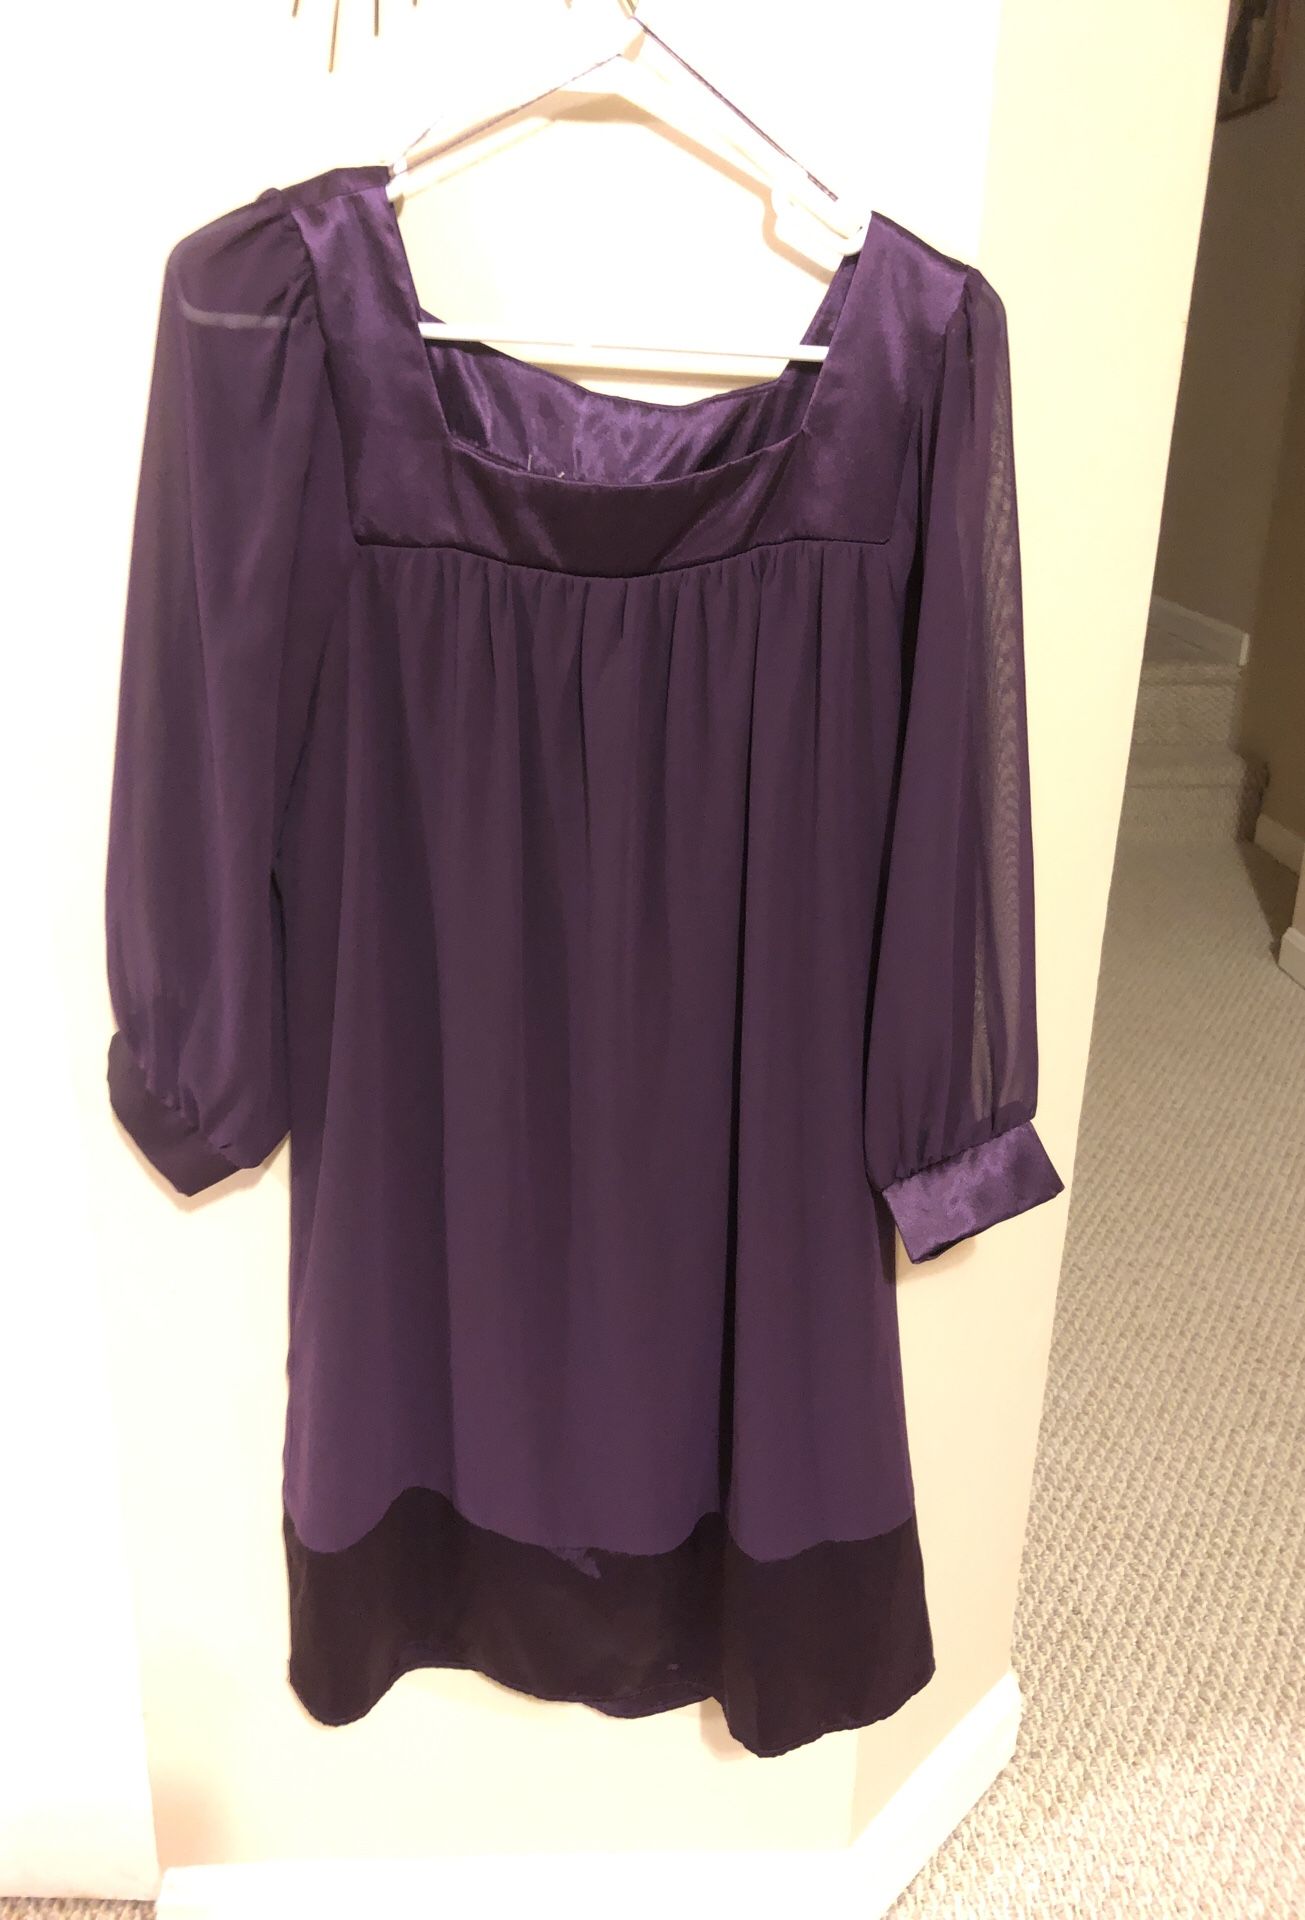 Size Large purple dress